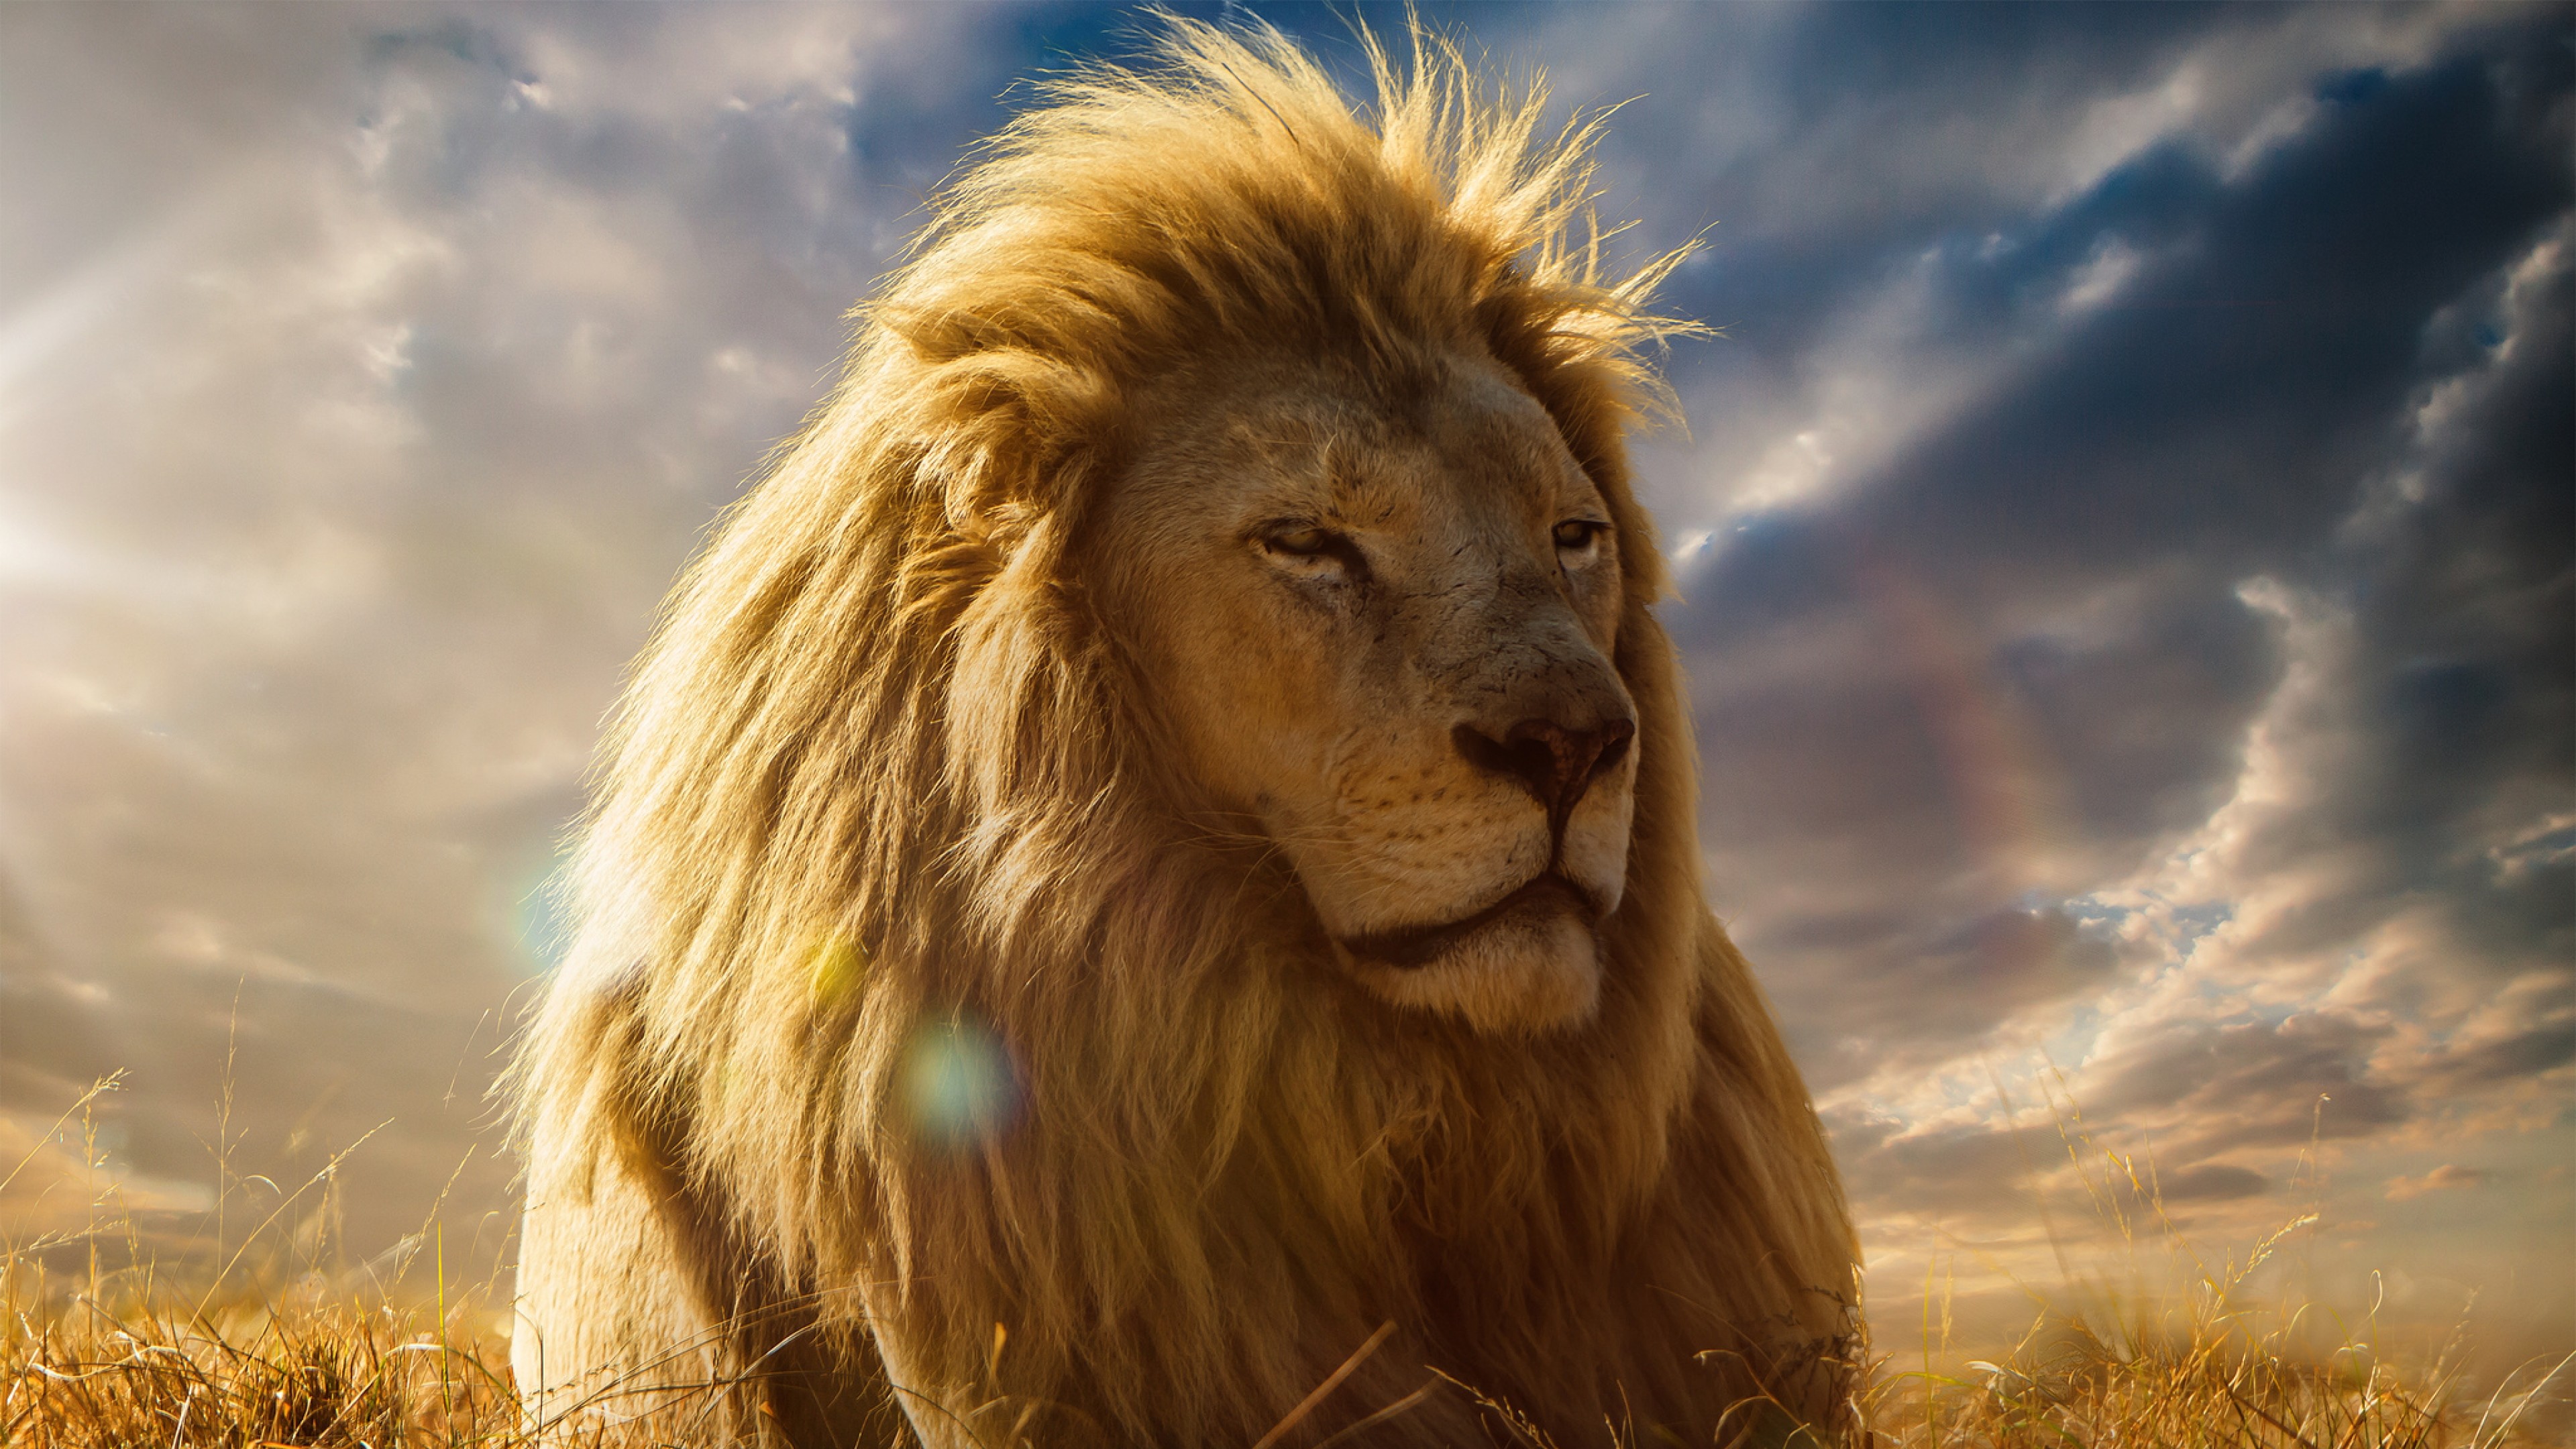 The King Lion Wallpaper Download  MOONAZ